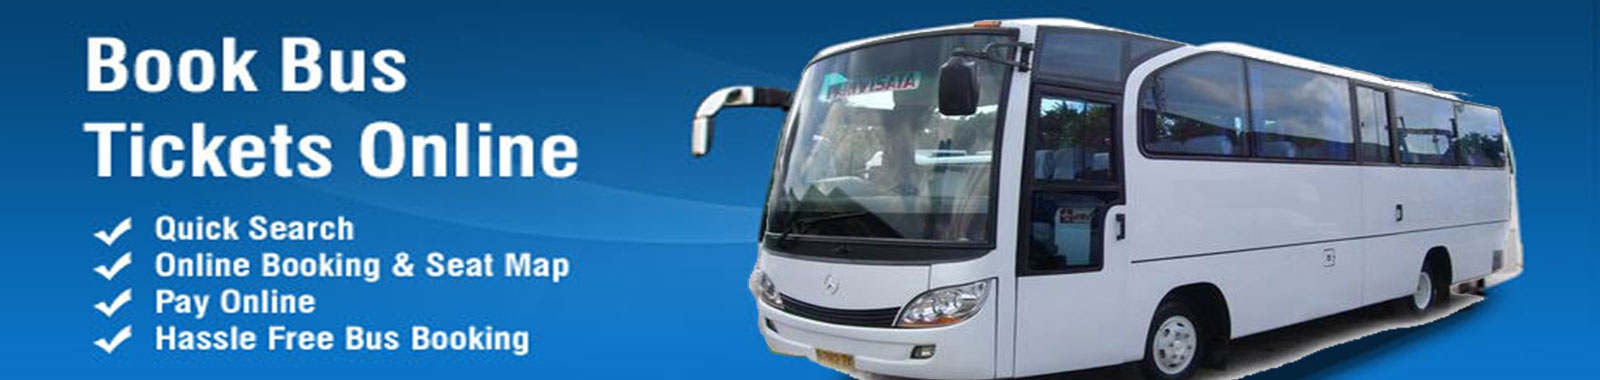 Bus Booking Services |  La Esperanza Travels